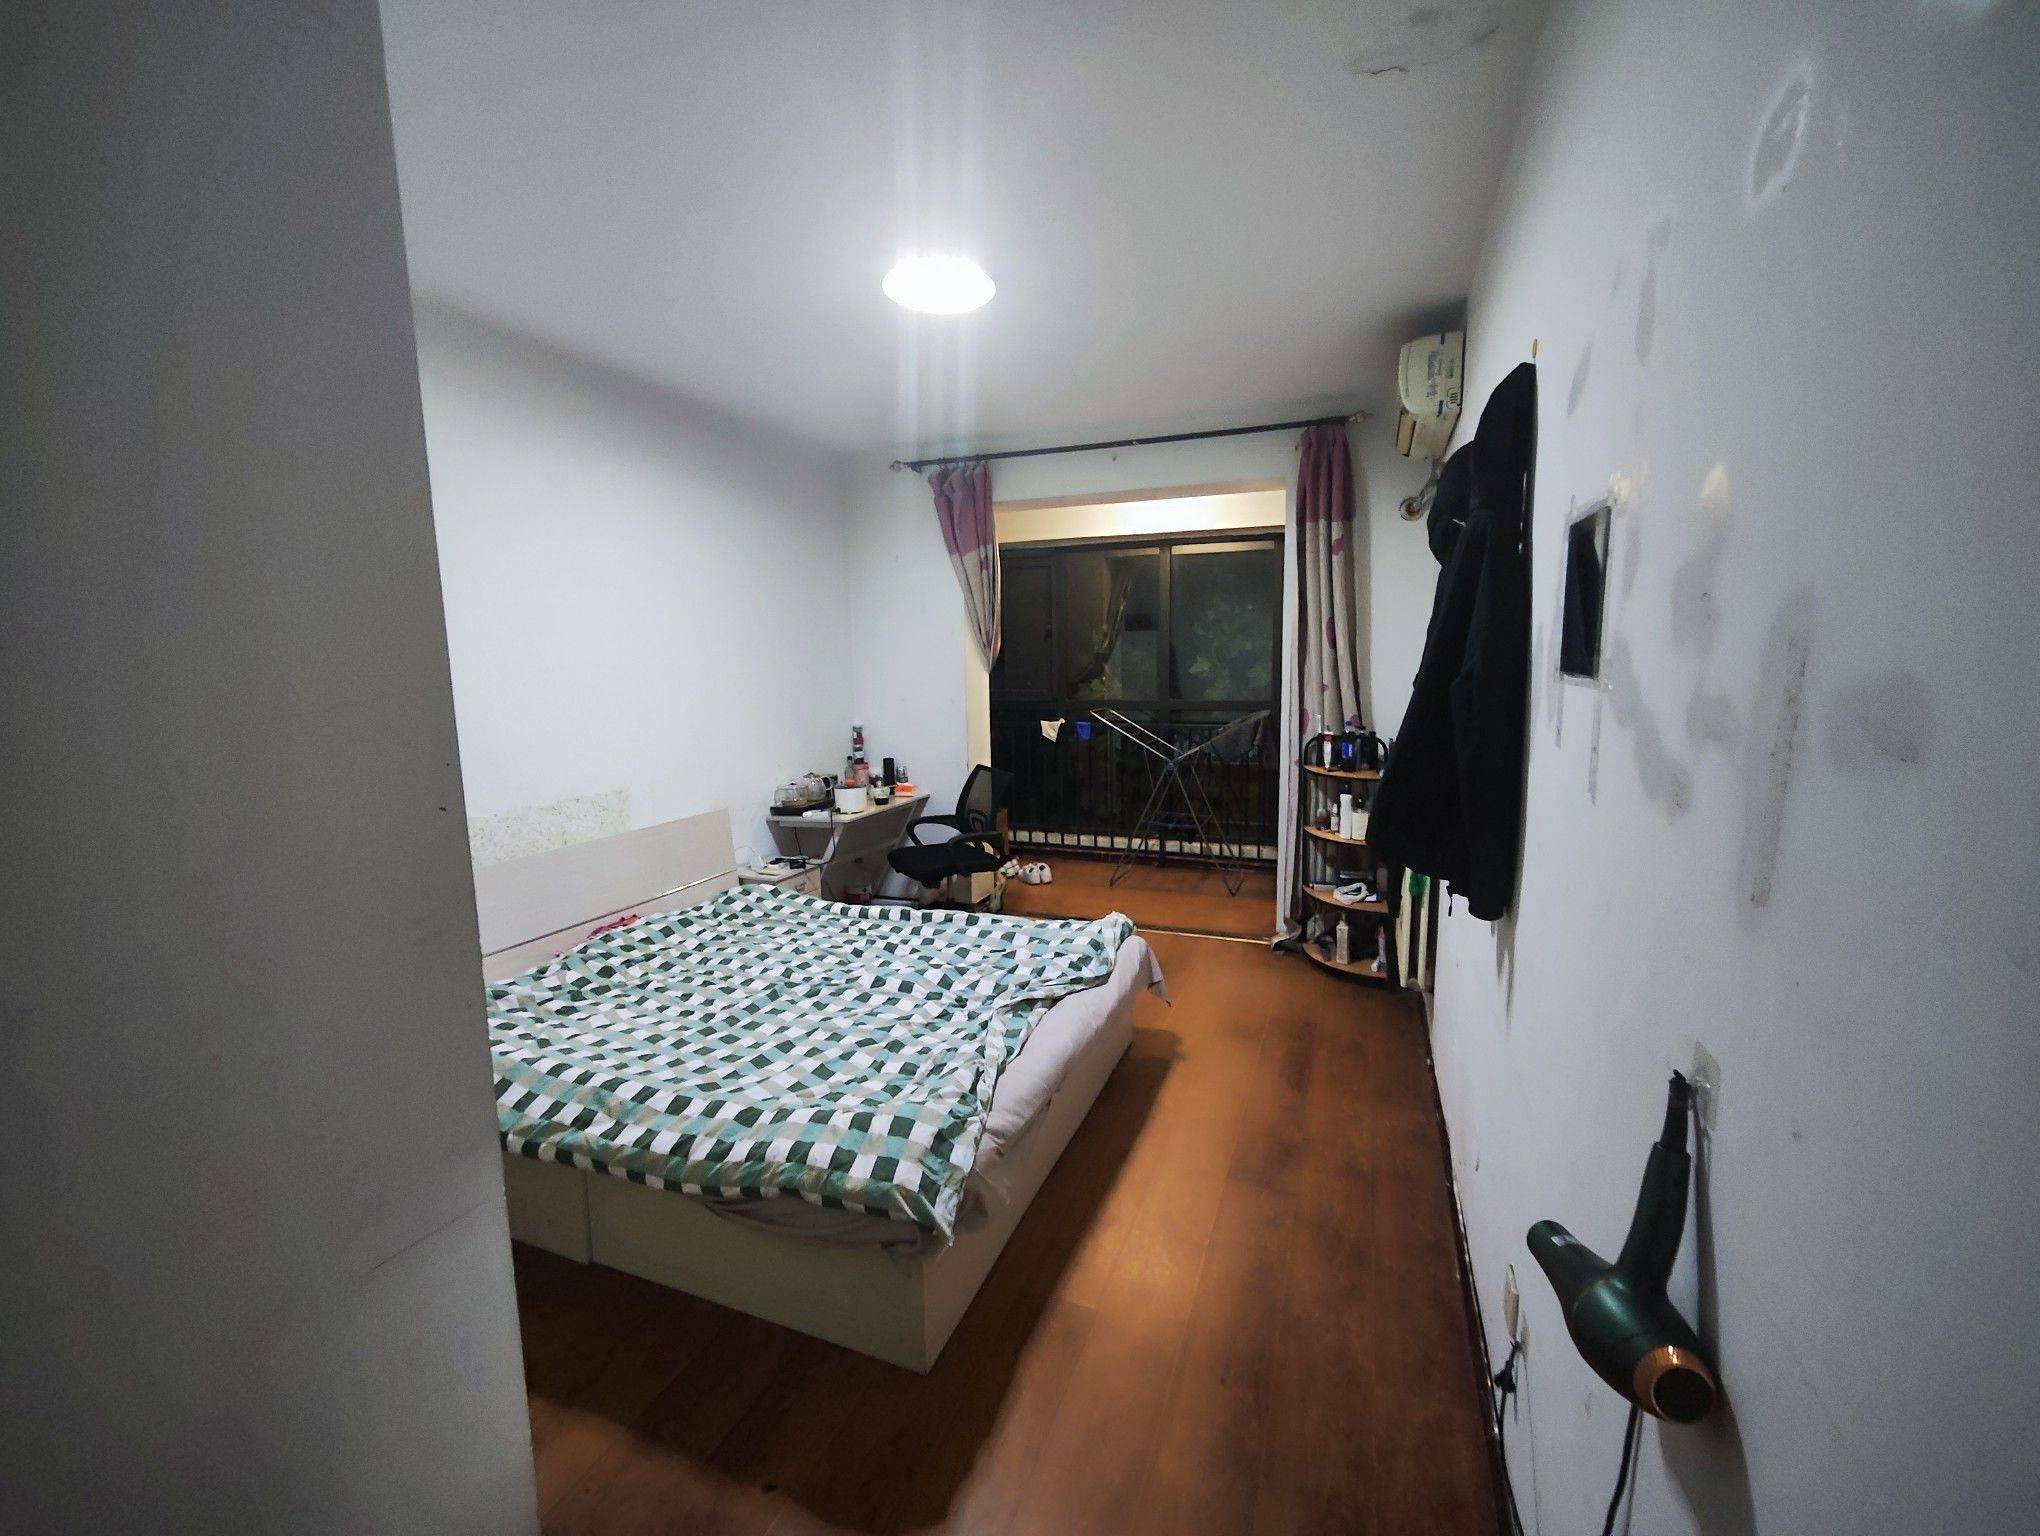 Tianjin-Beichen-Cozy Home,Clean&Comfy,No Gender Limit,Hustle & Bustle